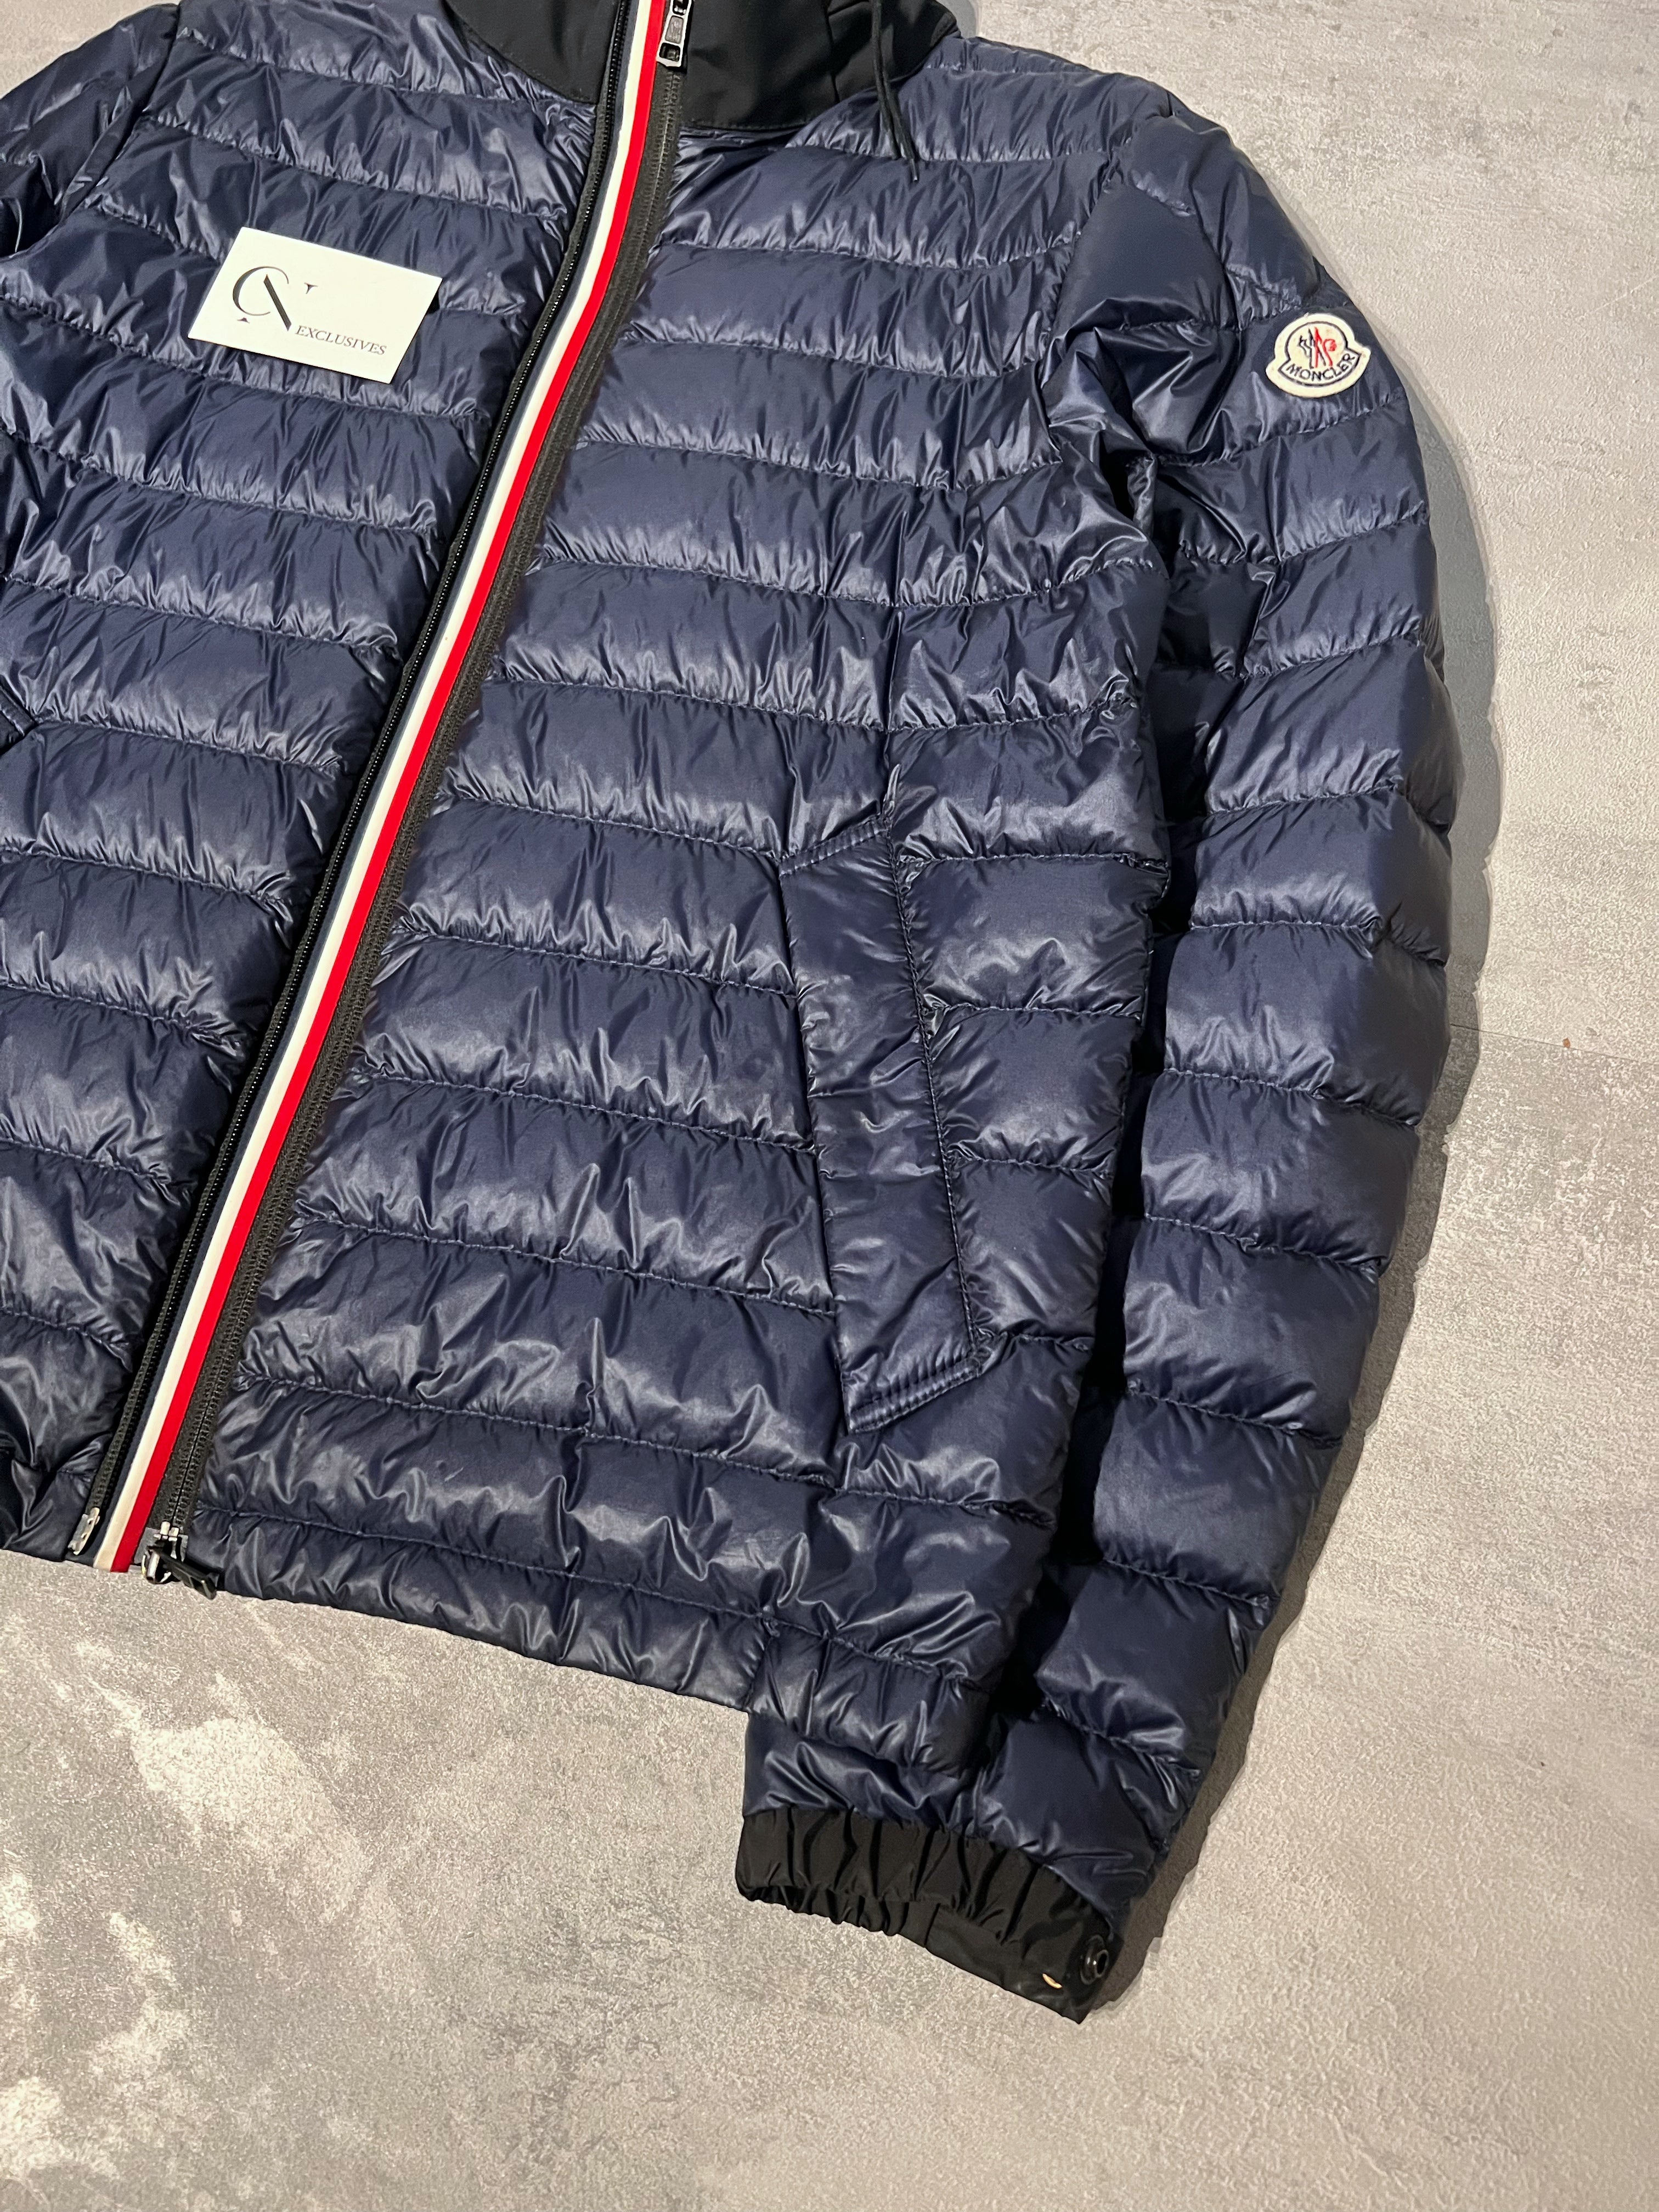 Moncler Arroux jacket - Size 4